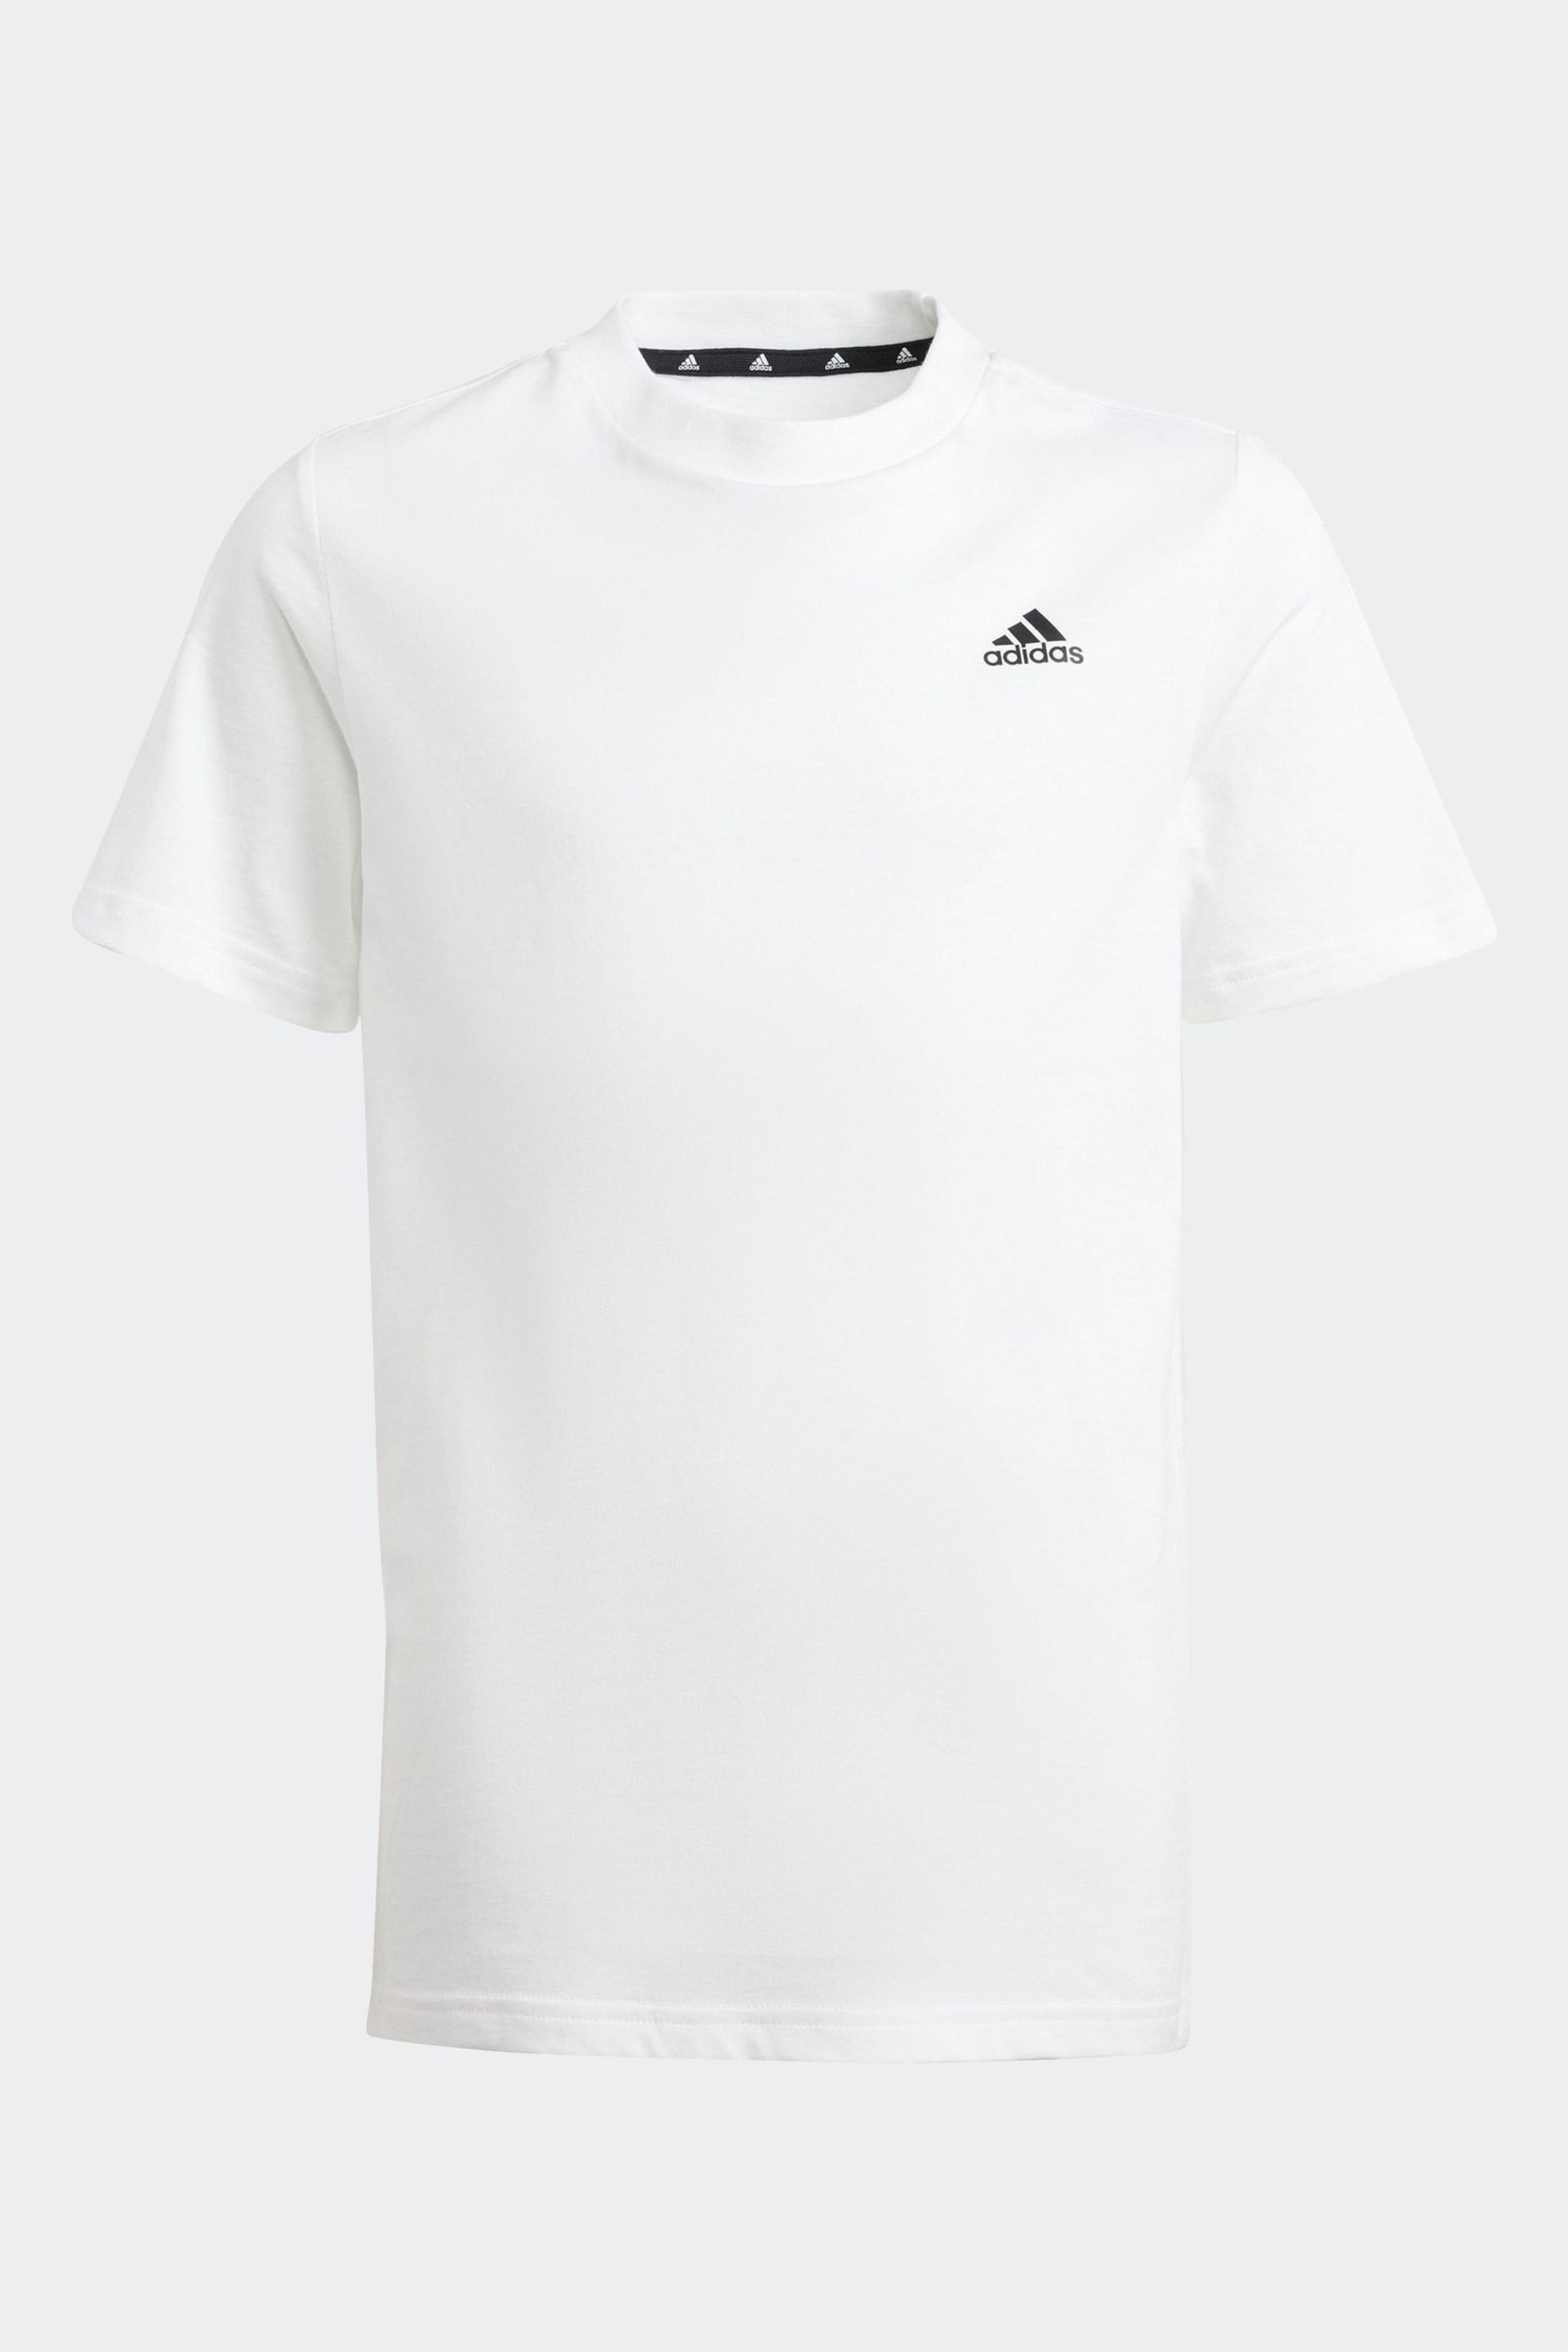 adidas White Sportswear Essentials Small Logo Cotton T-Shirt - Image 1 of 6